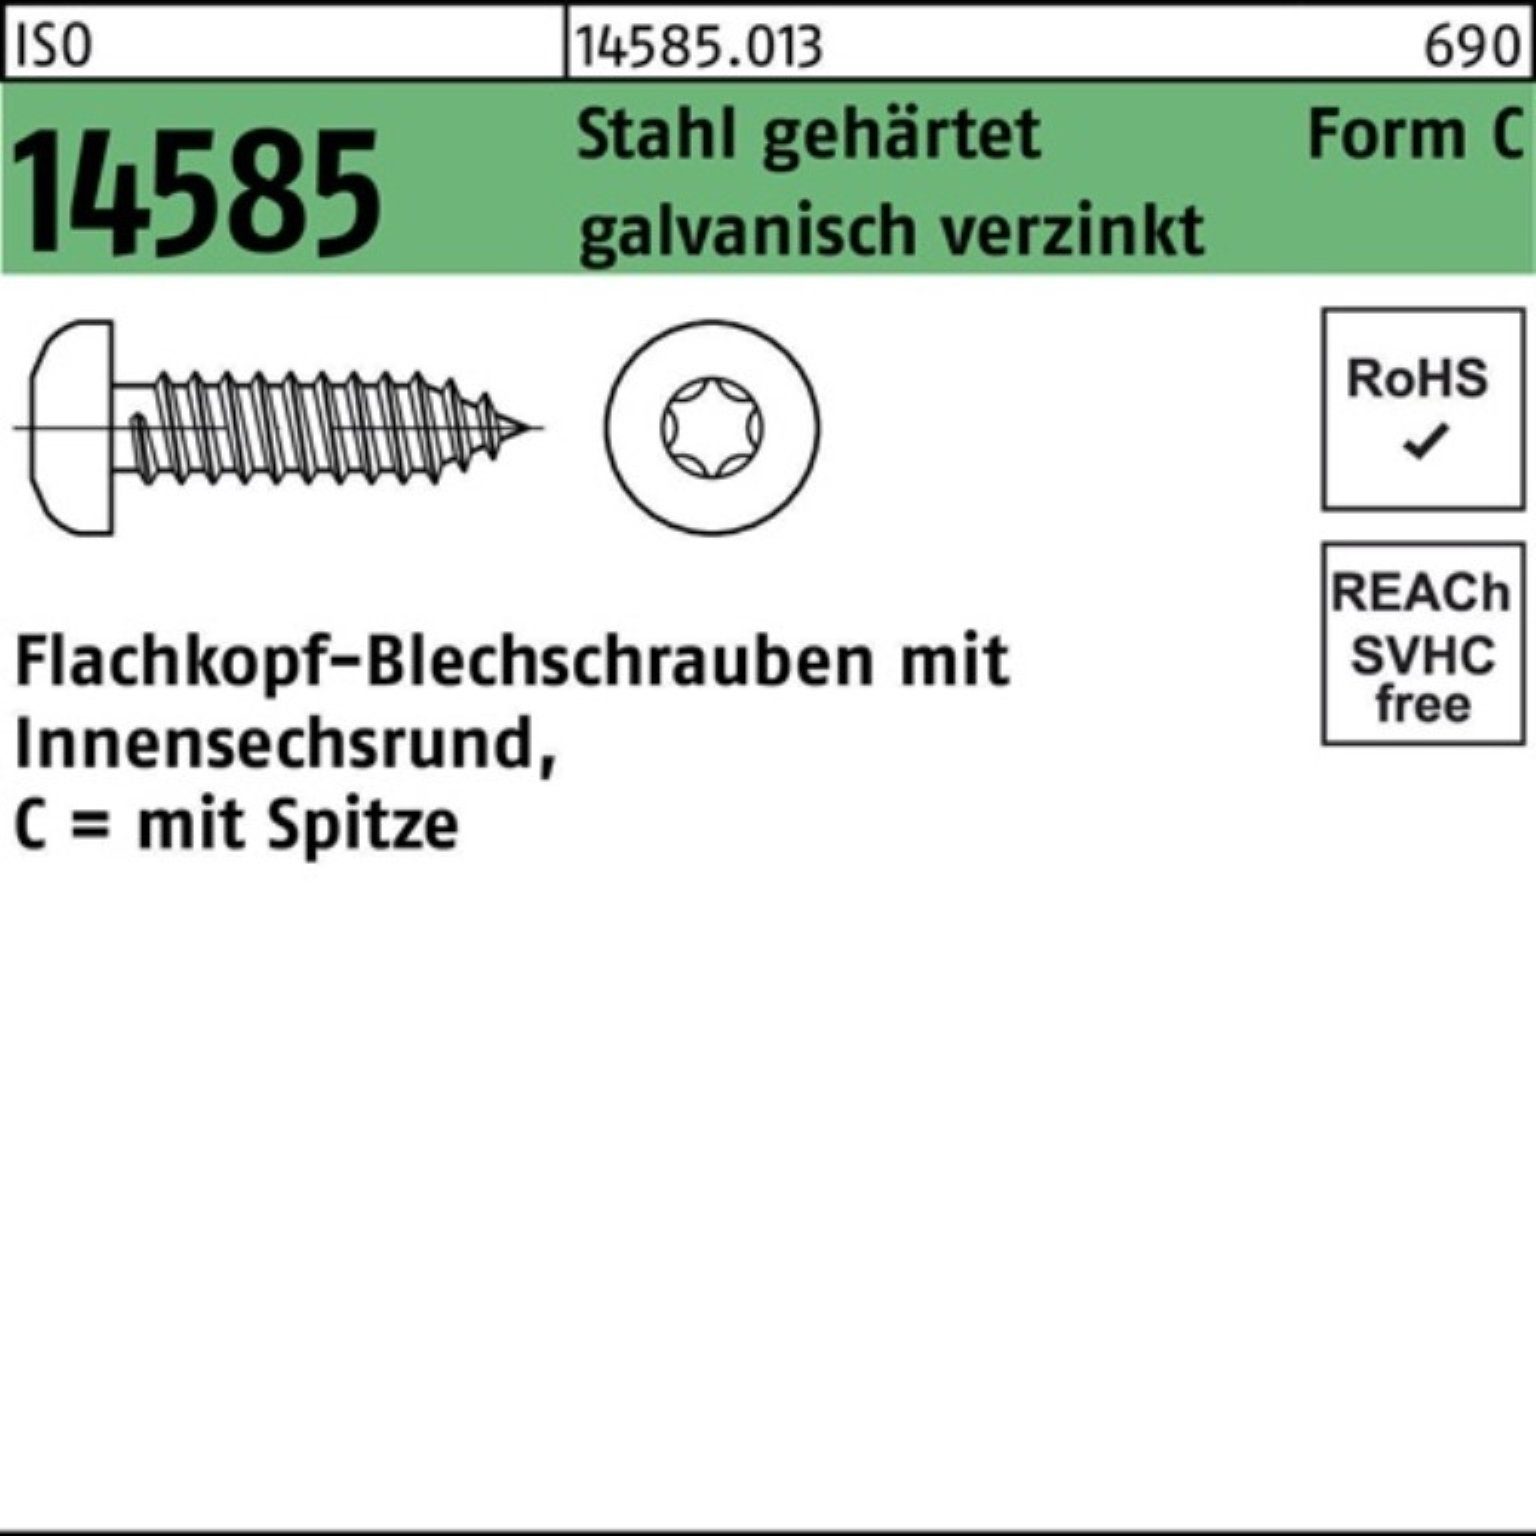 ISO ISR/Spitze Blechschraube Stahl Reyher 500er -C-T25 geh. Blechschraube Pack 14585 4,8x25